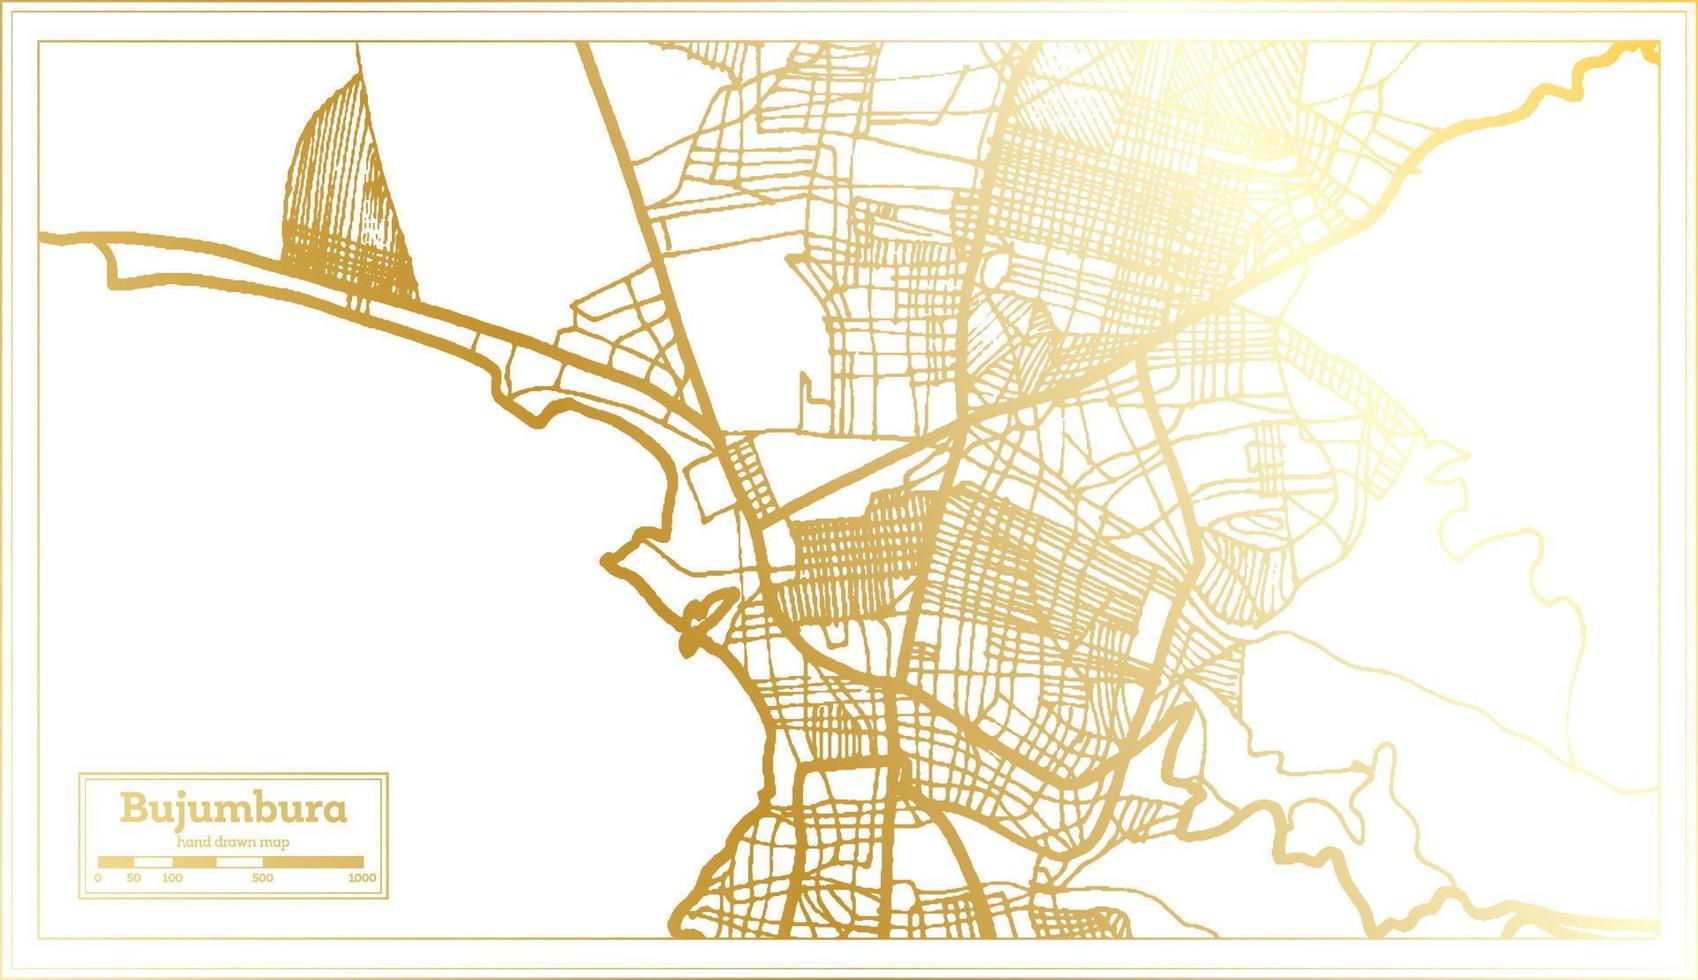 Bujumbura Burundi City Map in Retro Style in Golden Color. Outline Map. vector